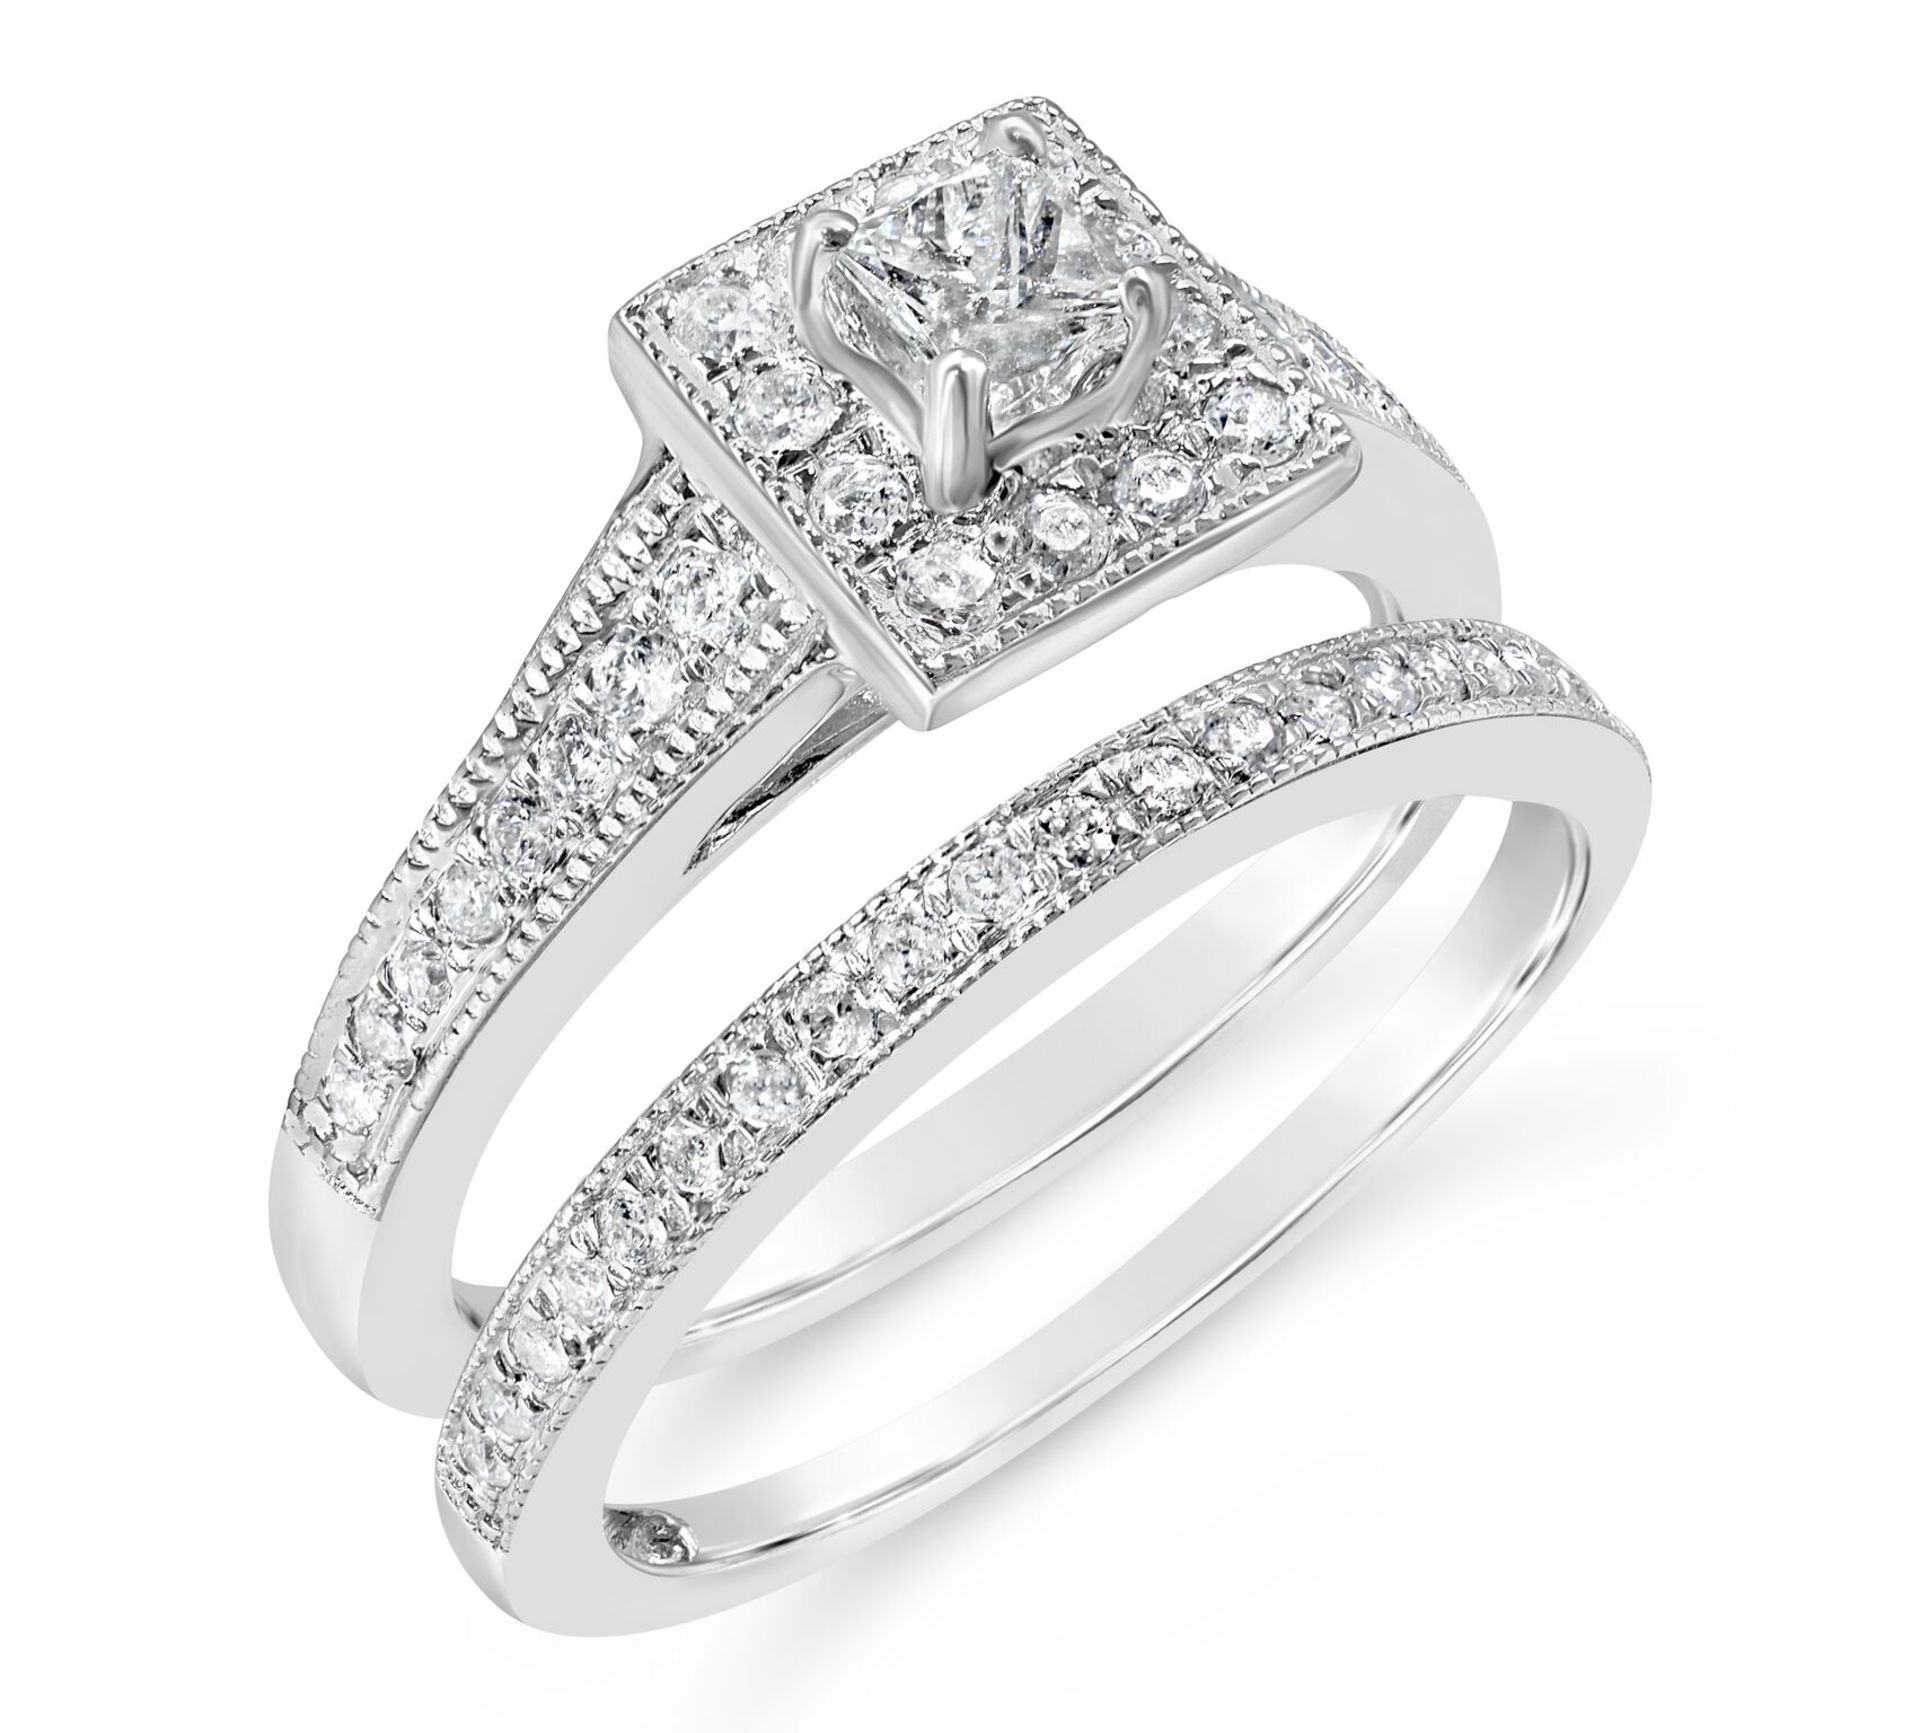 Bridal Set Of Princess cut Diamond Engagement and Wedding Ring in White Gold, Metal 9ct White